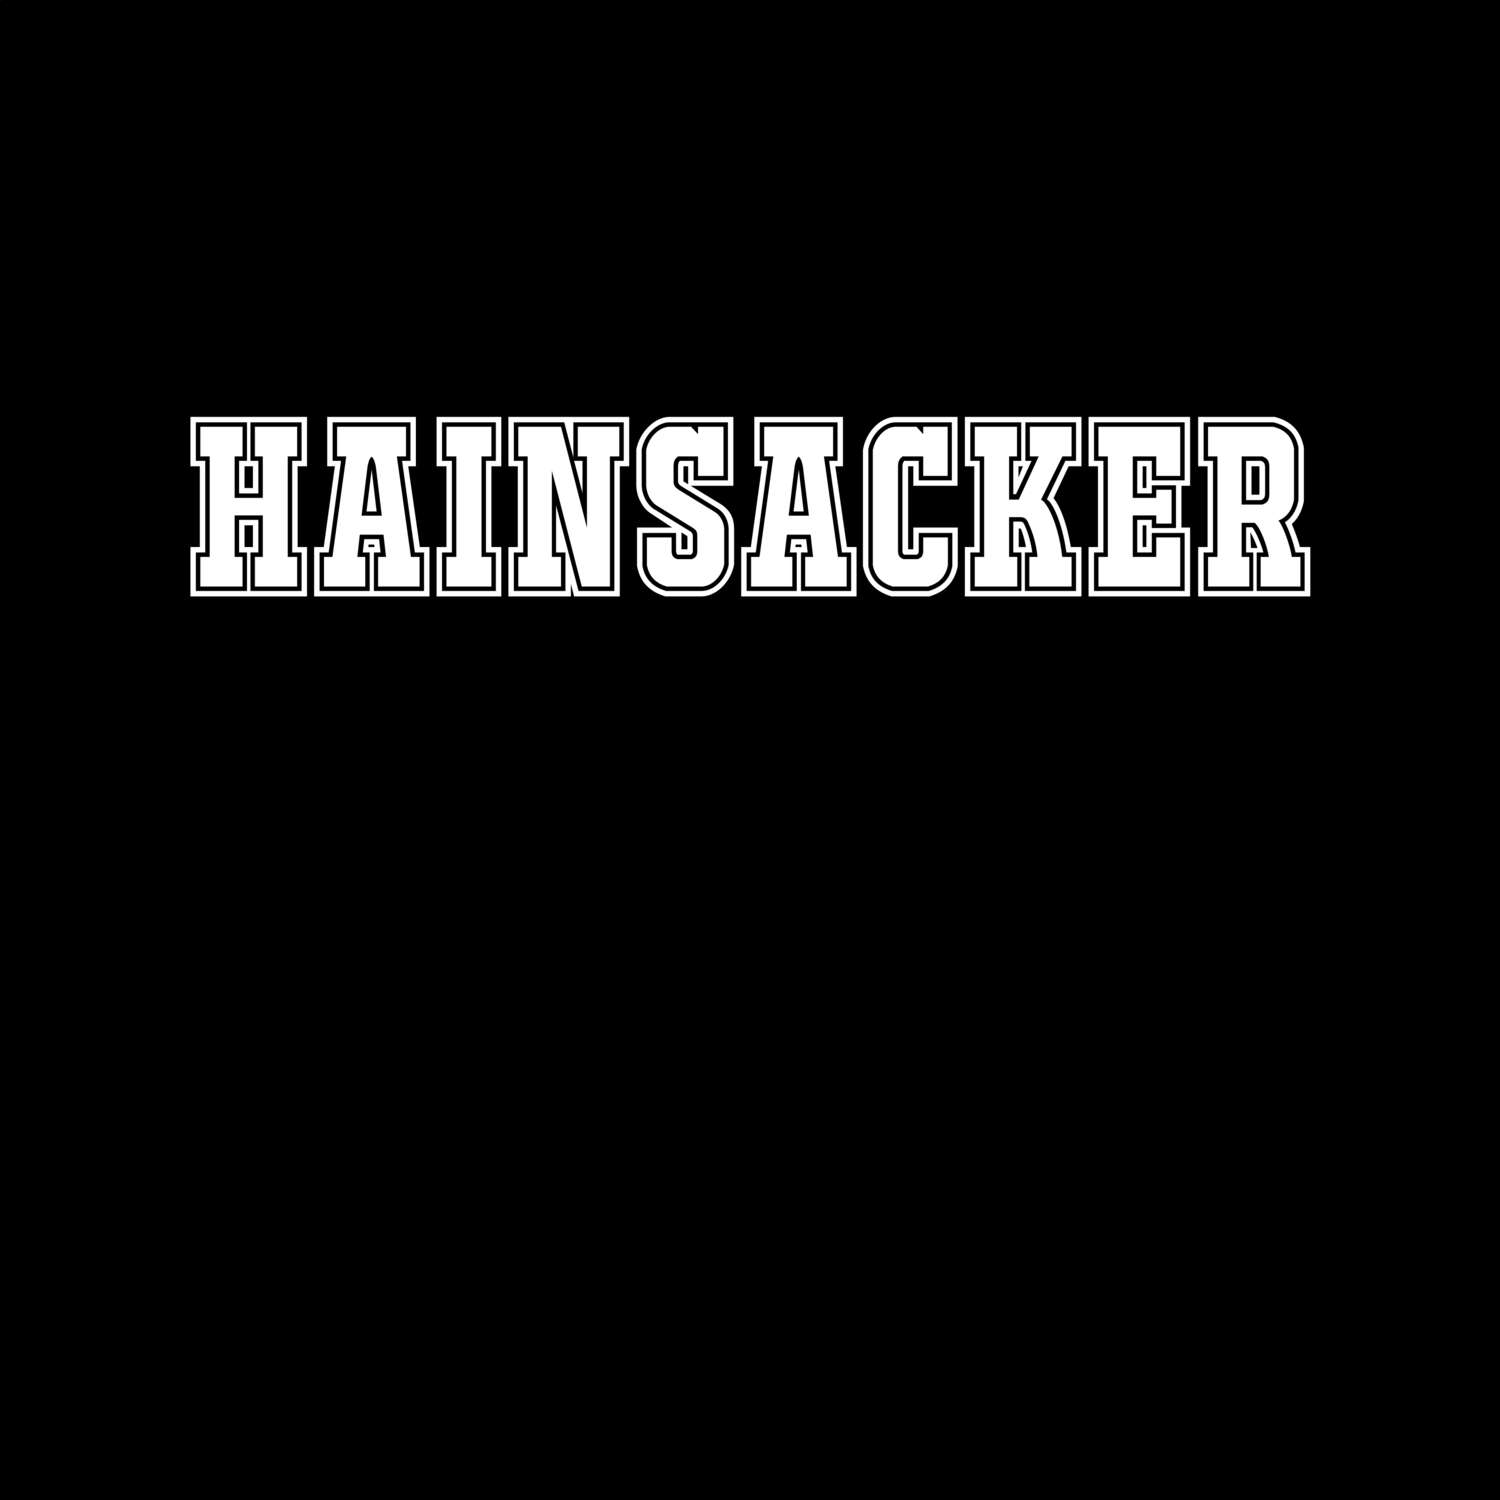 Hainsacker T-Shirt »Classic«